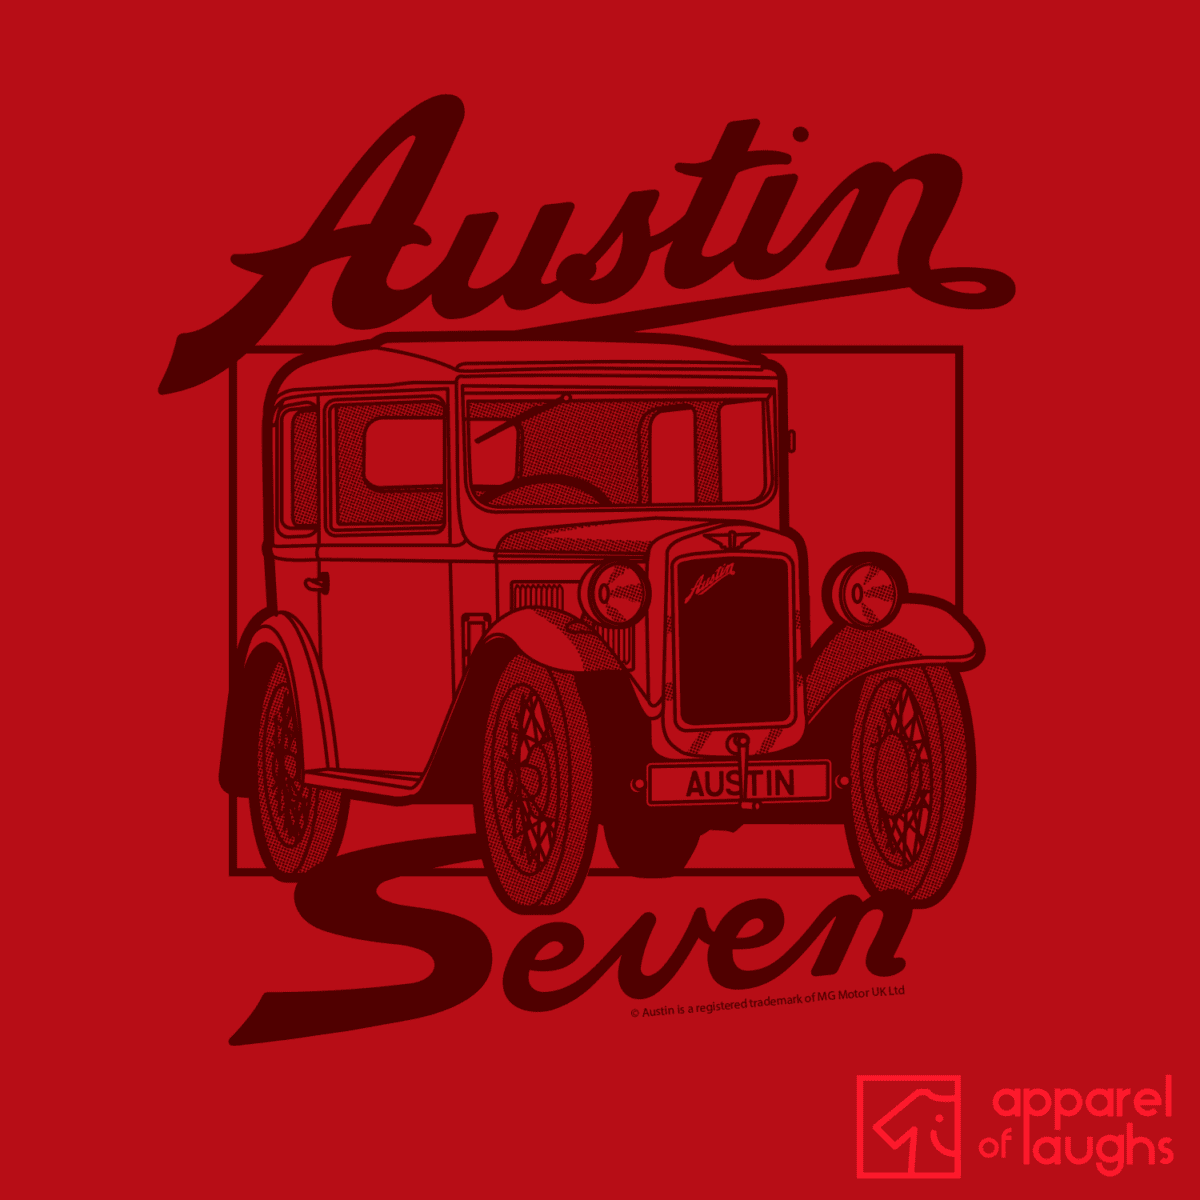 Austin Seven Car Brand Vintage Retro British Motoring Heritage T-Shirt Design Red